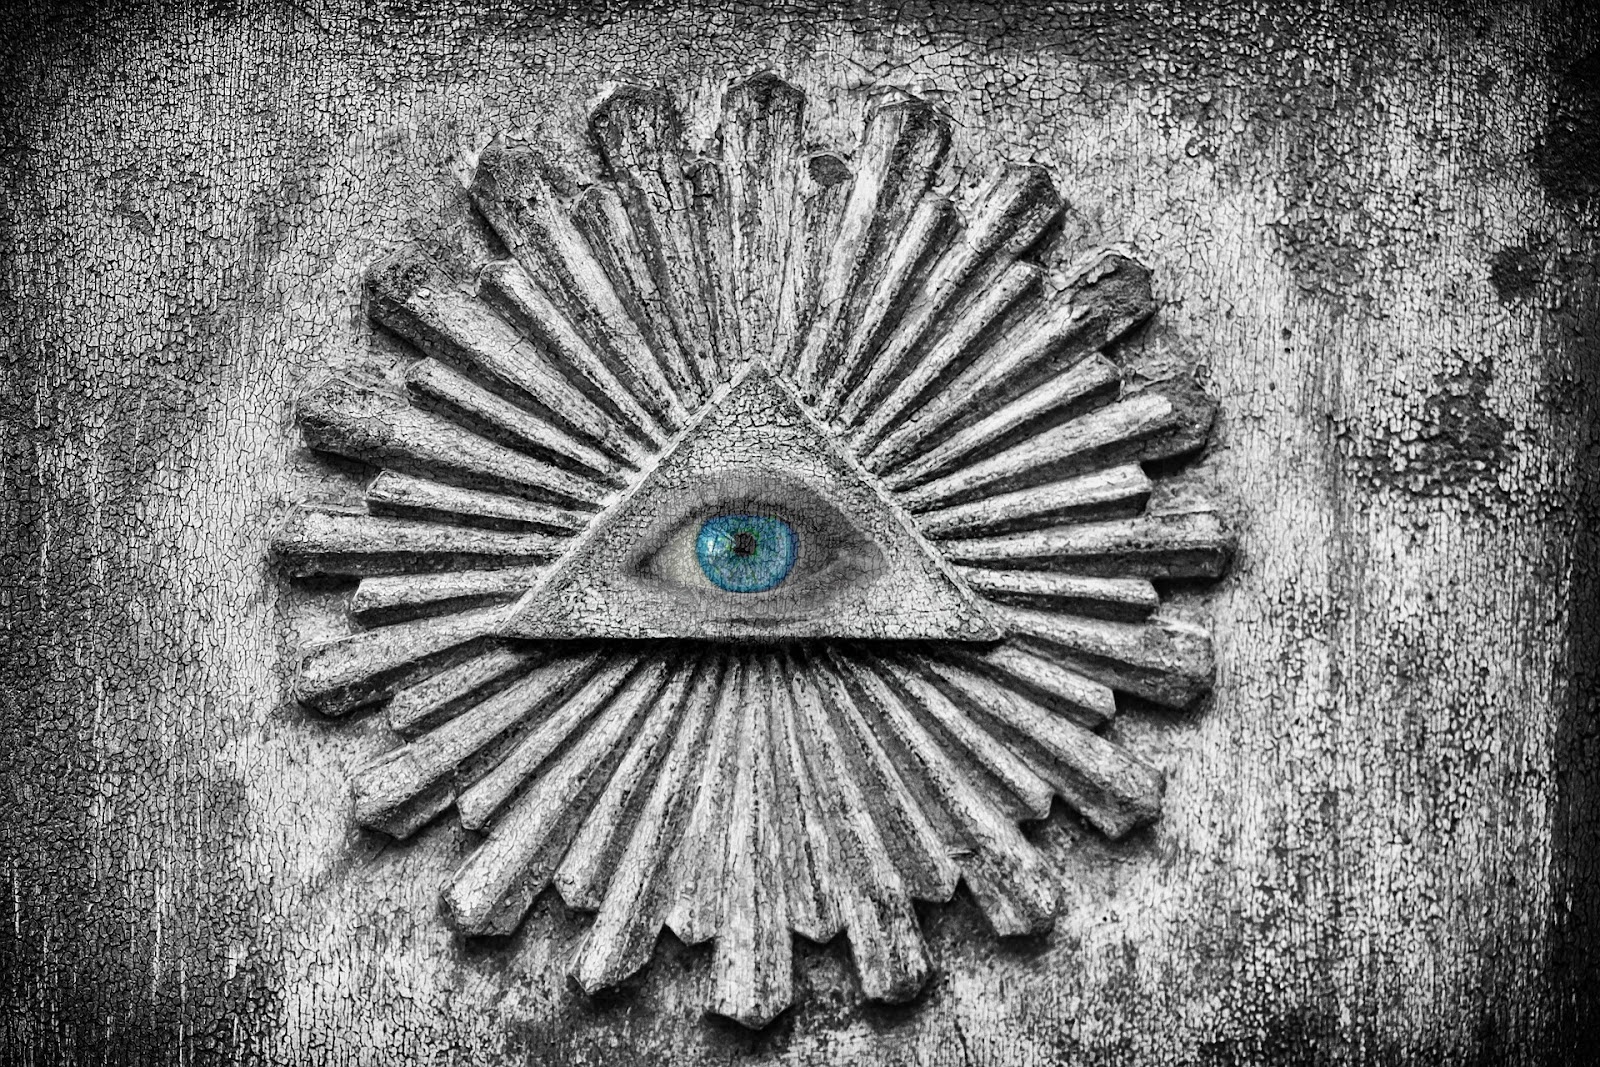 The eye of the Illuminati is all seeing